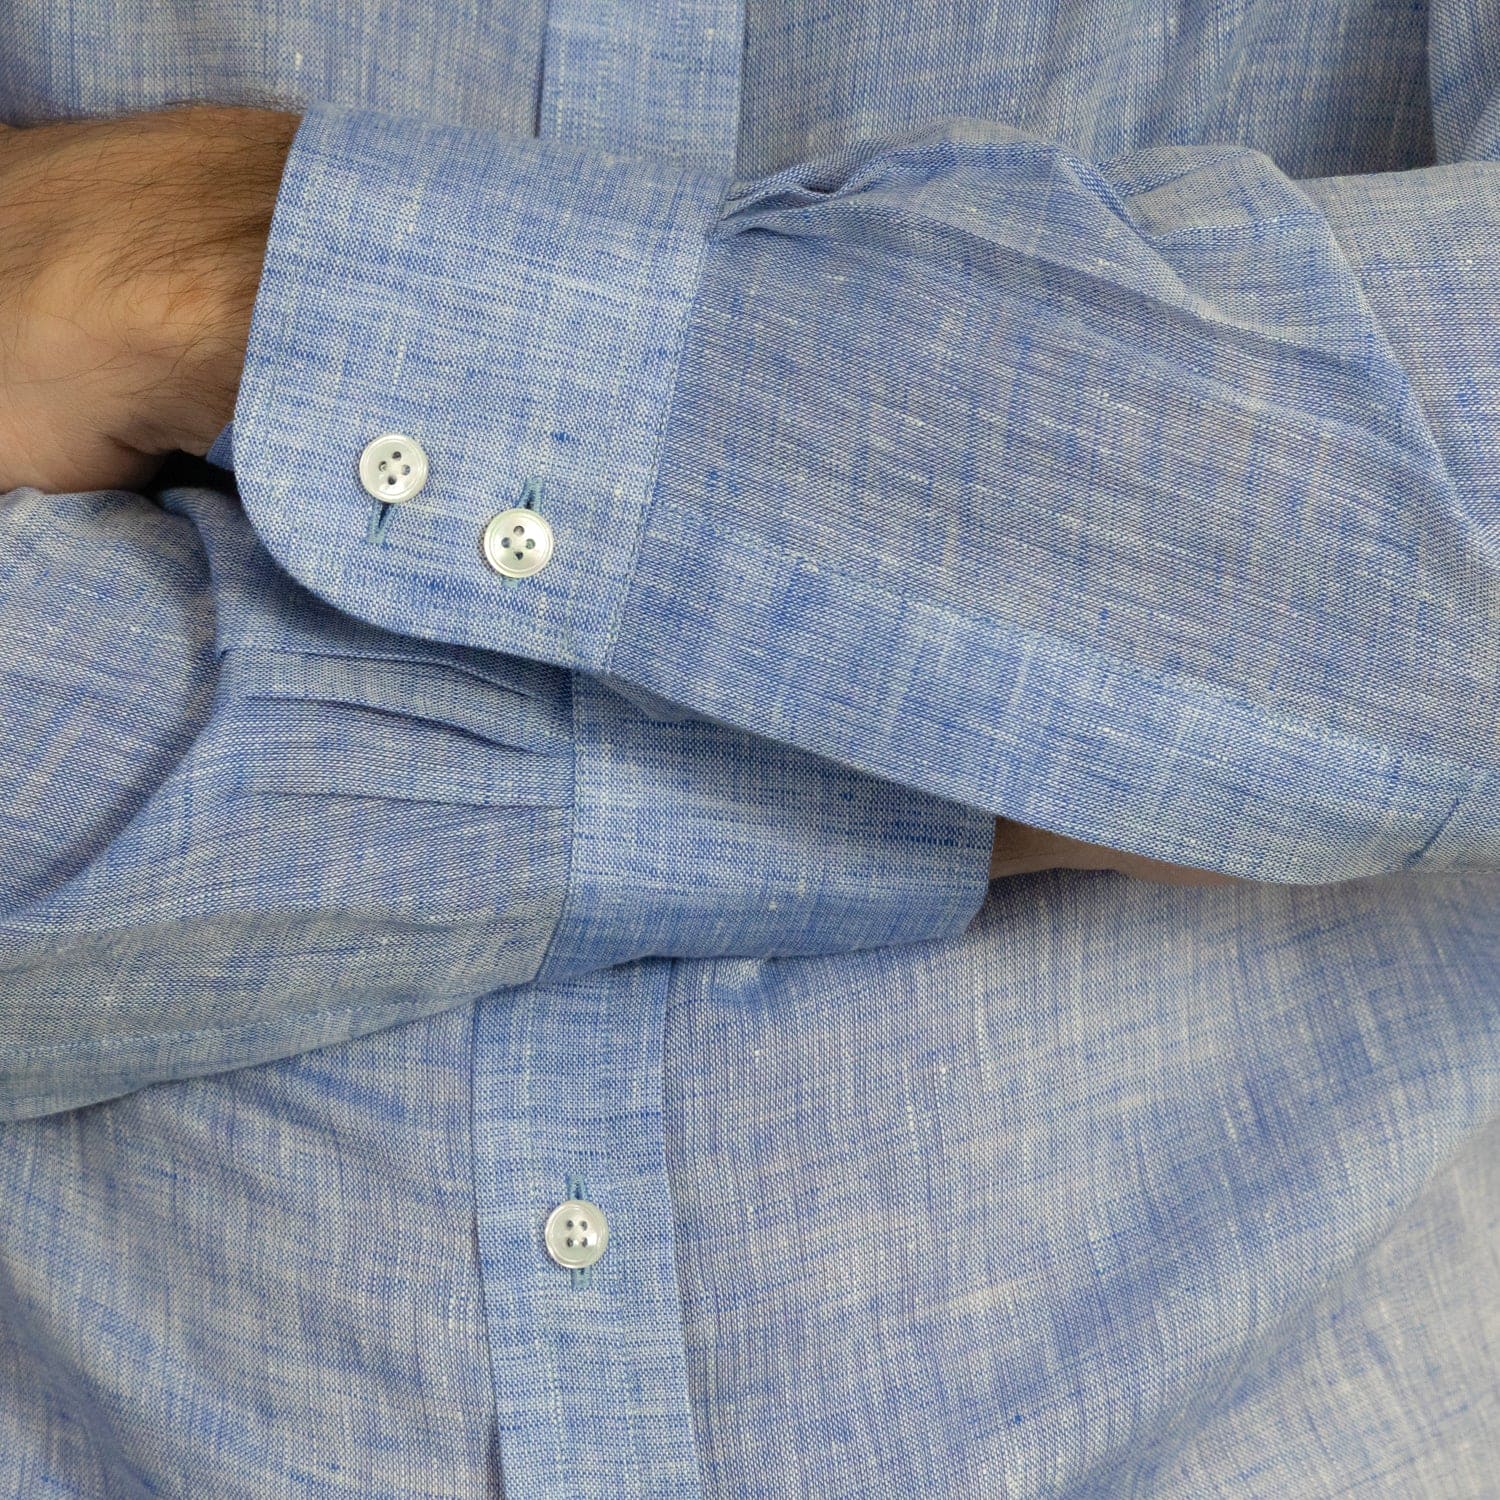 Contemporary Fit, Button Down Collar, 2 Button Cuff Shirt in Plain Navy Linen